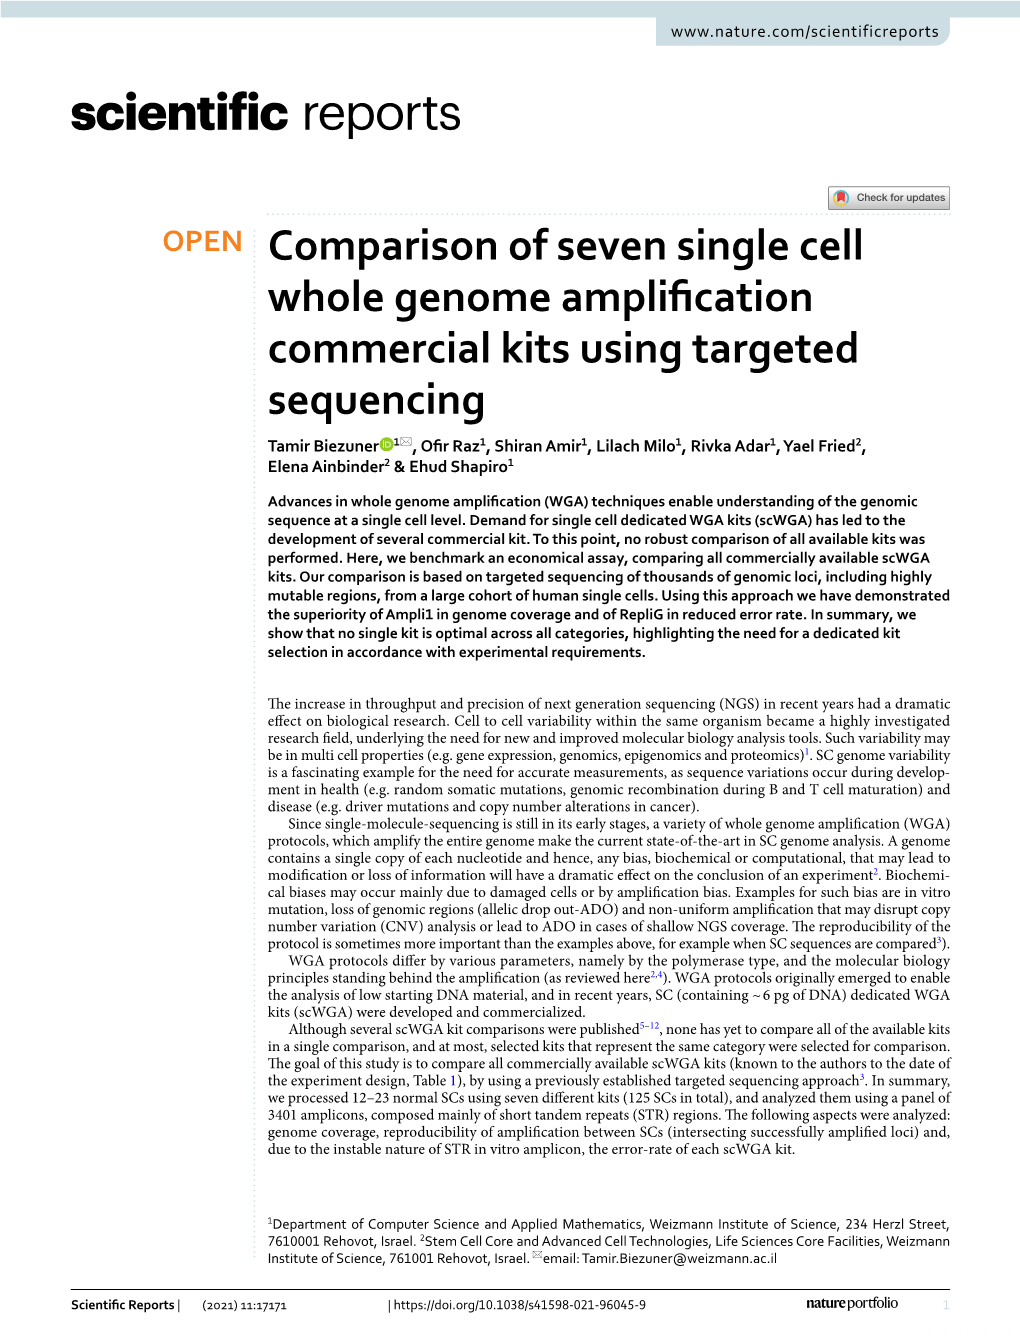 Comparison of Seven Single Cell Whole Genome Amplification